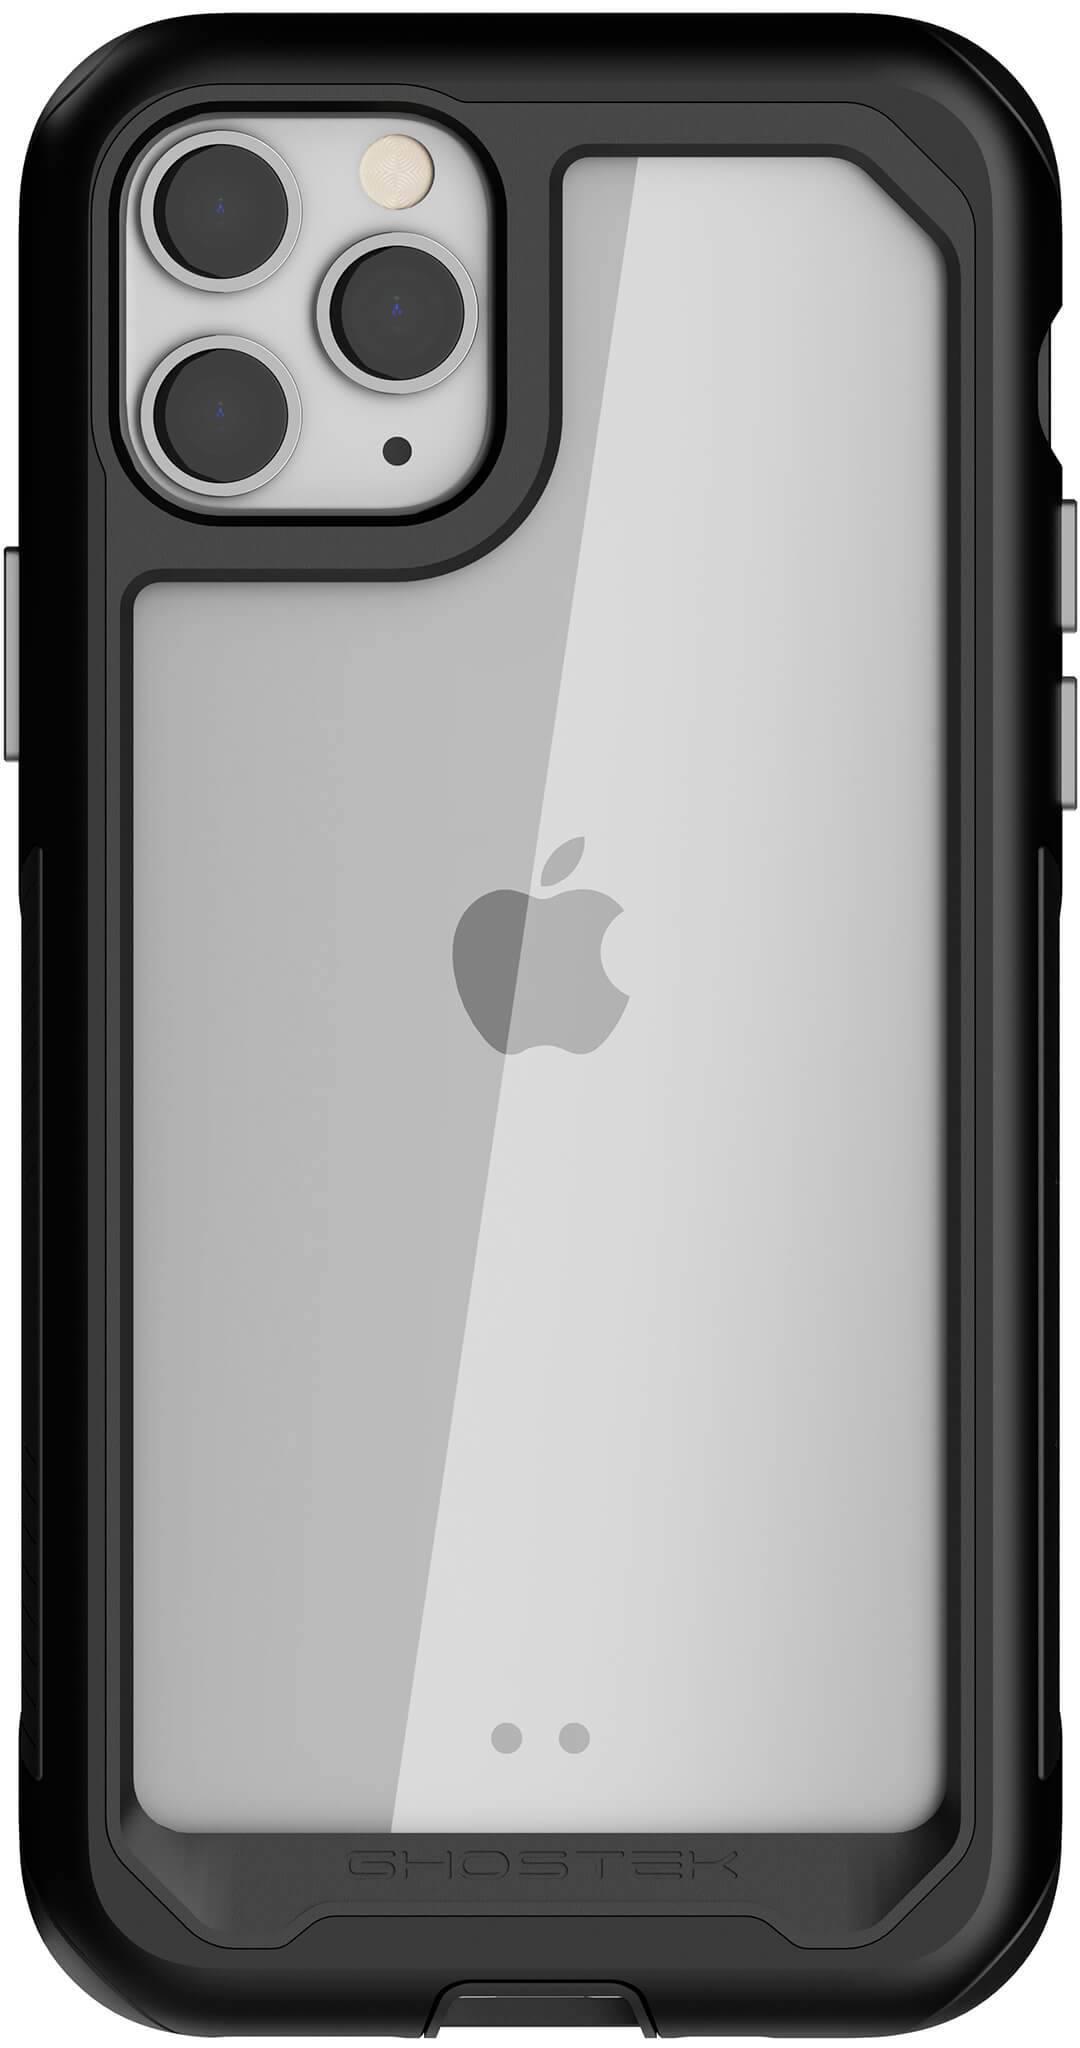 Ghostek Atomic Slim 3 Case for iPhone 11 Pro (Black)